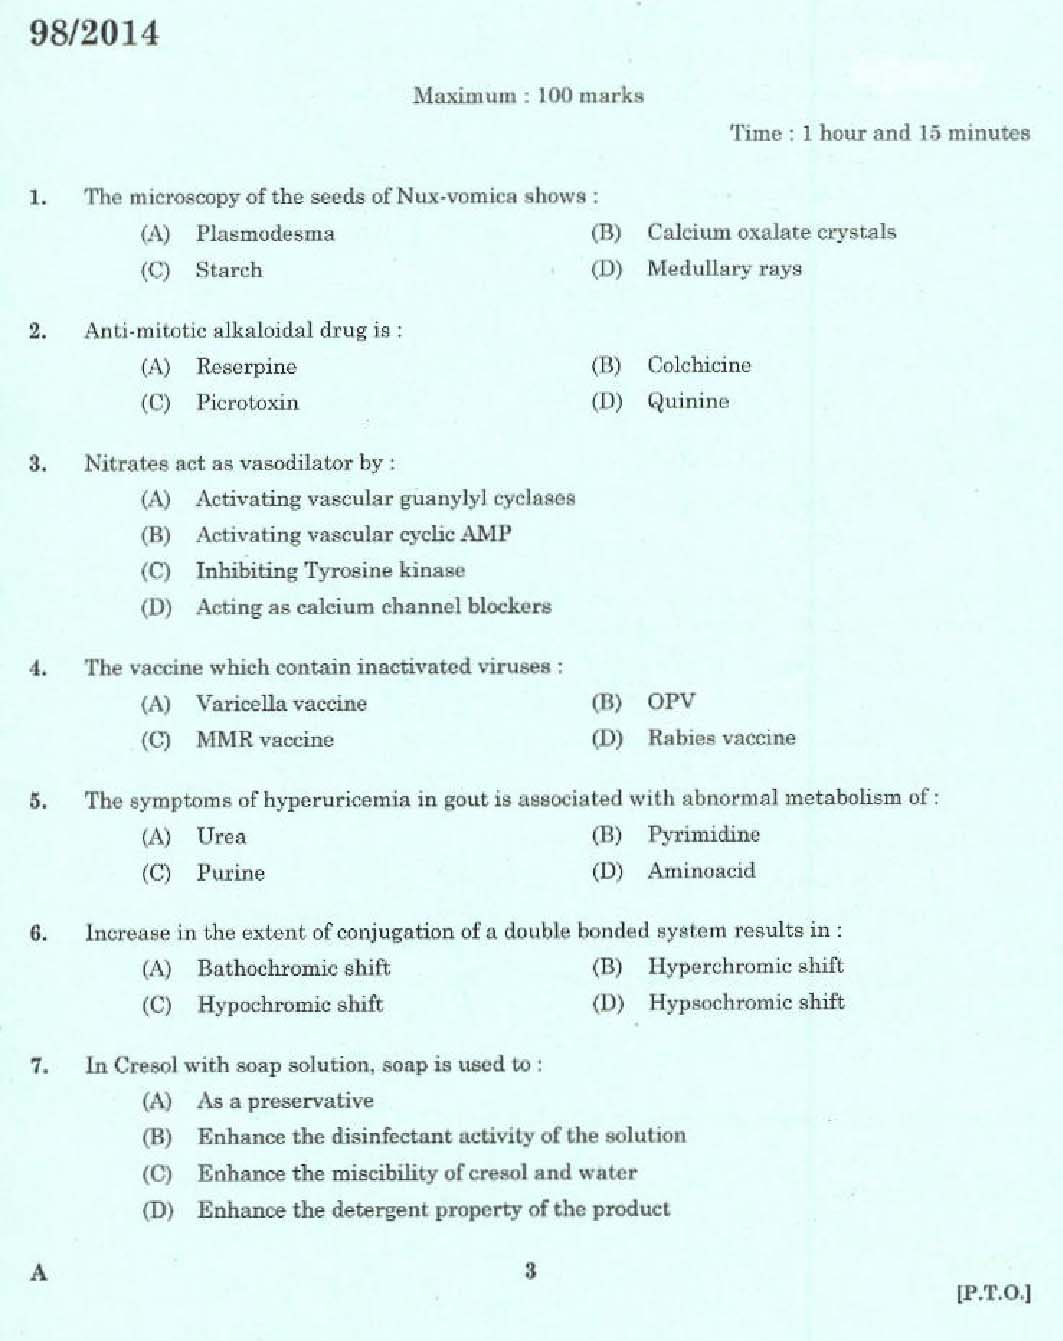 Kerala PSC Pharma Chemist Exam Code 982014 1